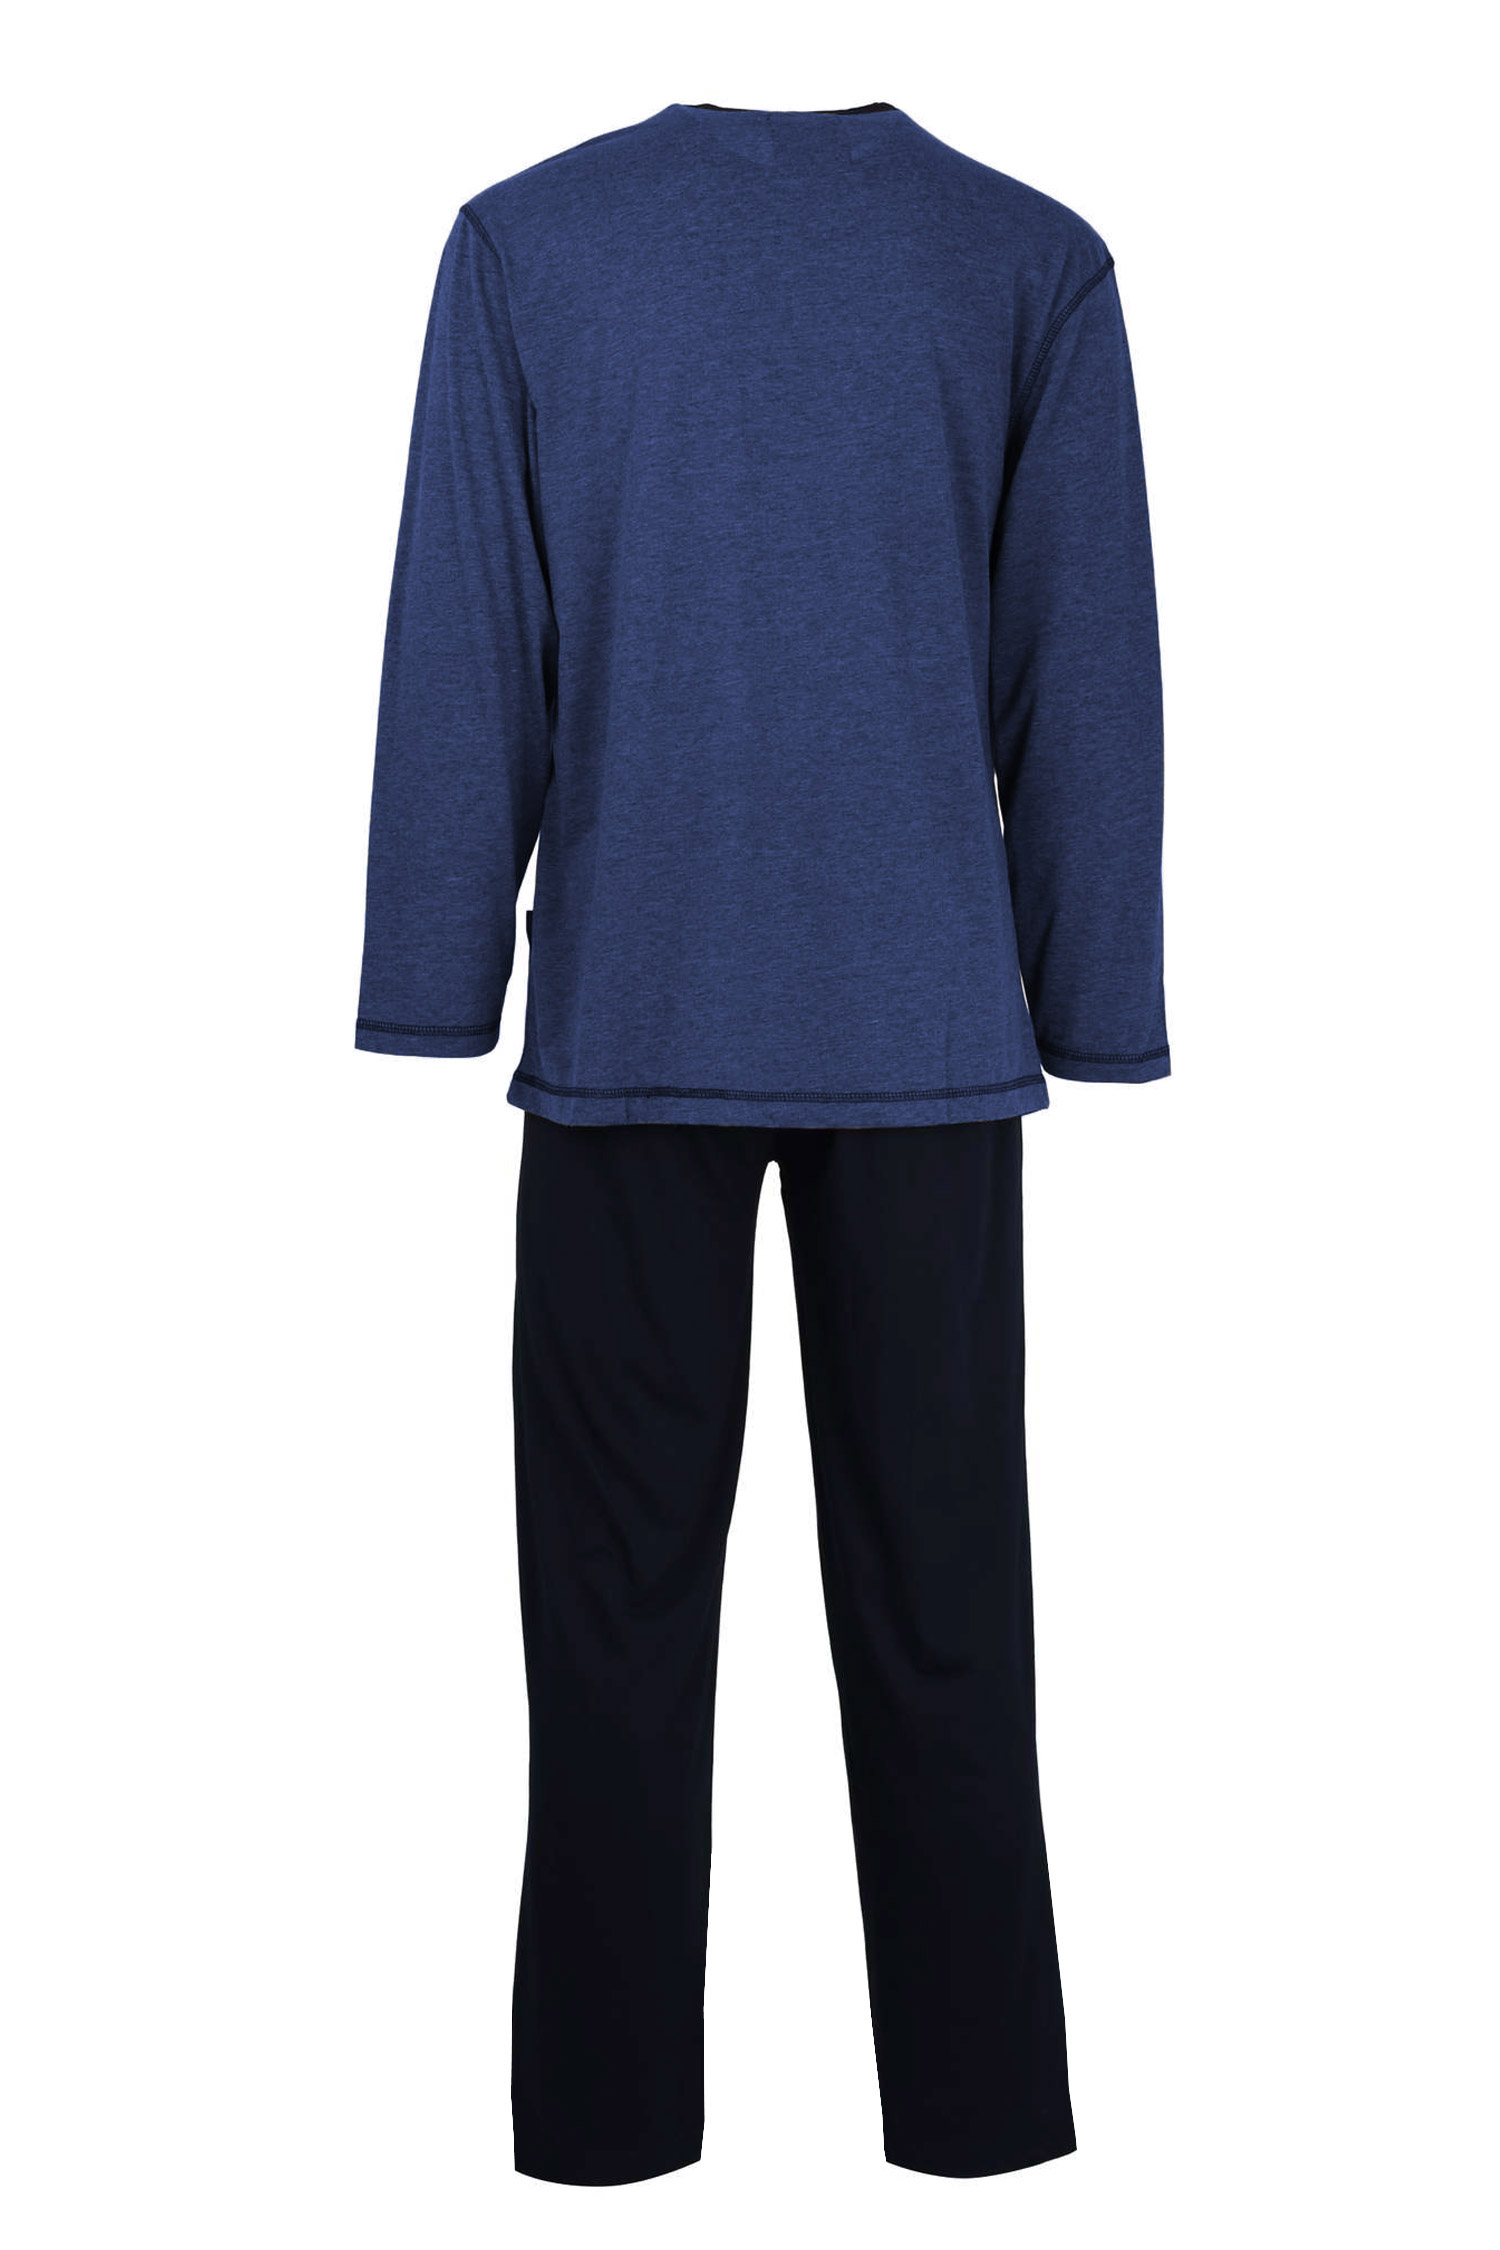 Homewear, Pijama M. Larga, 110578, NOCHE | Zoom